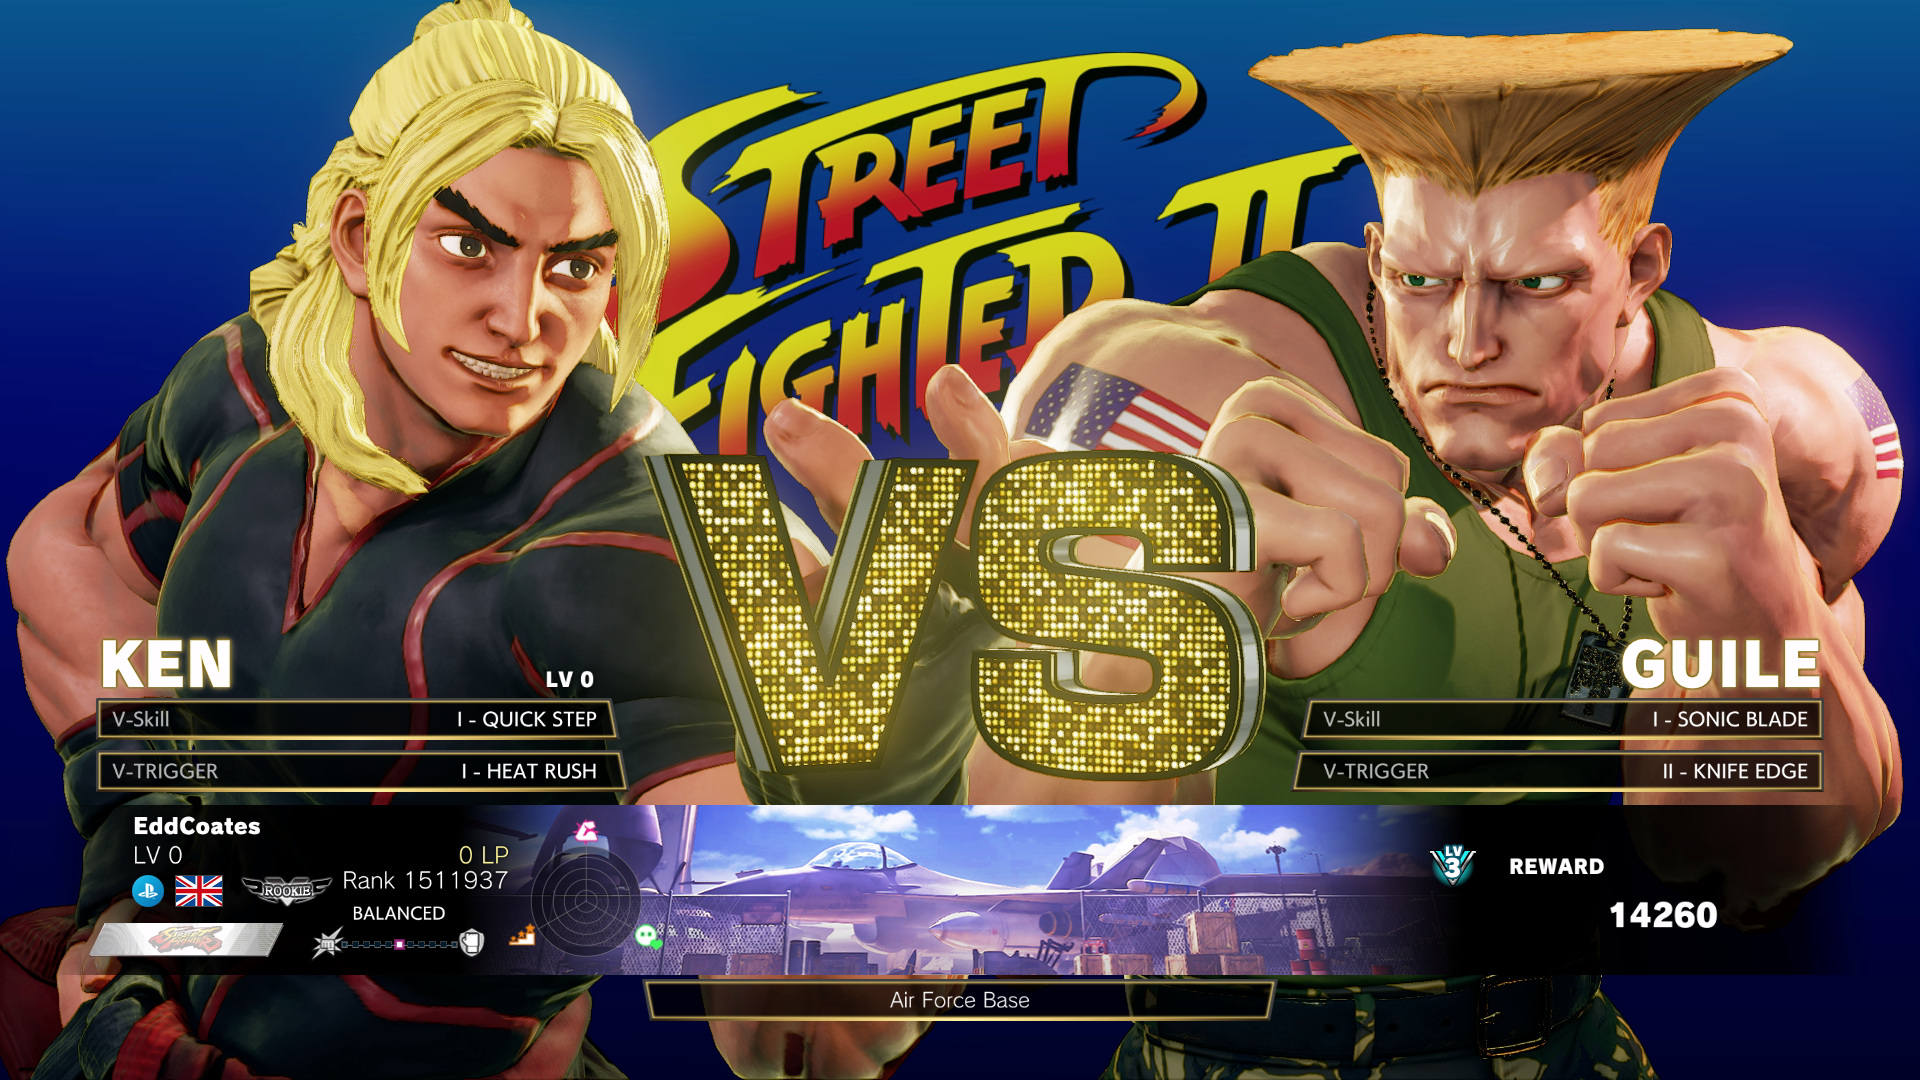 Street Fighter V: Champion Edition - IGN